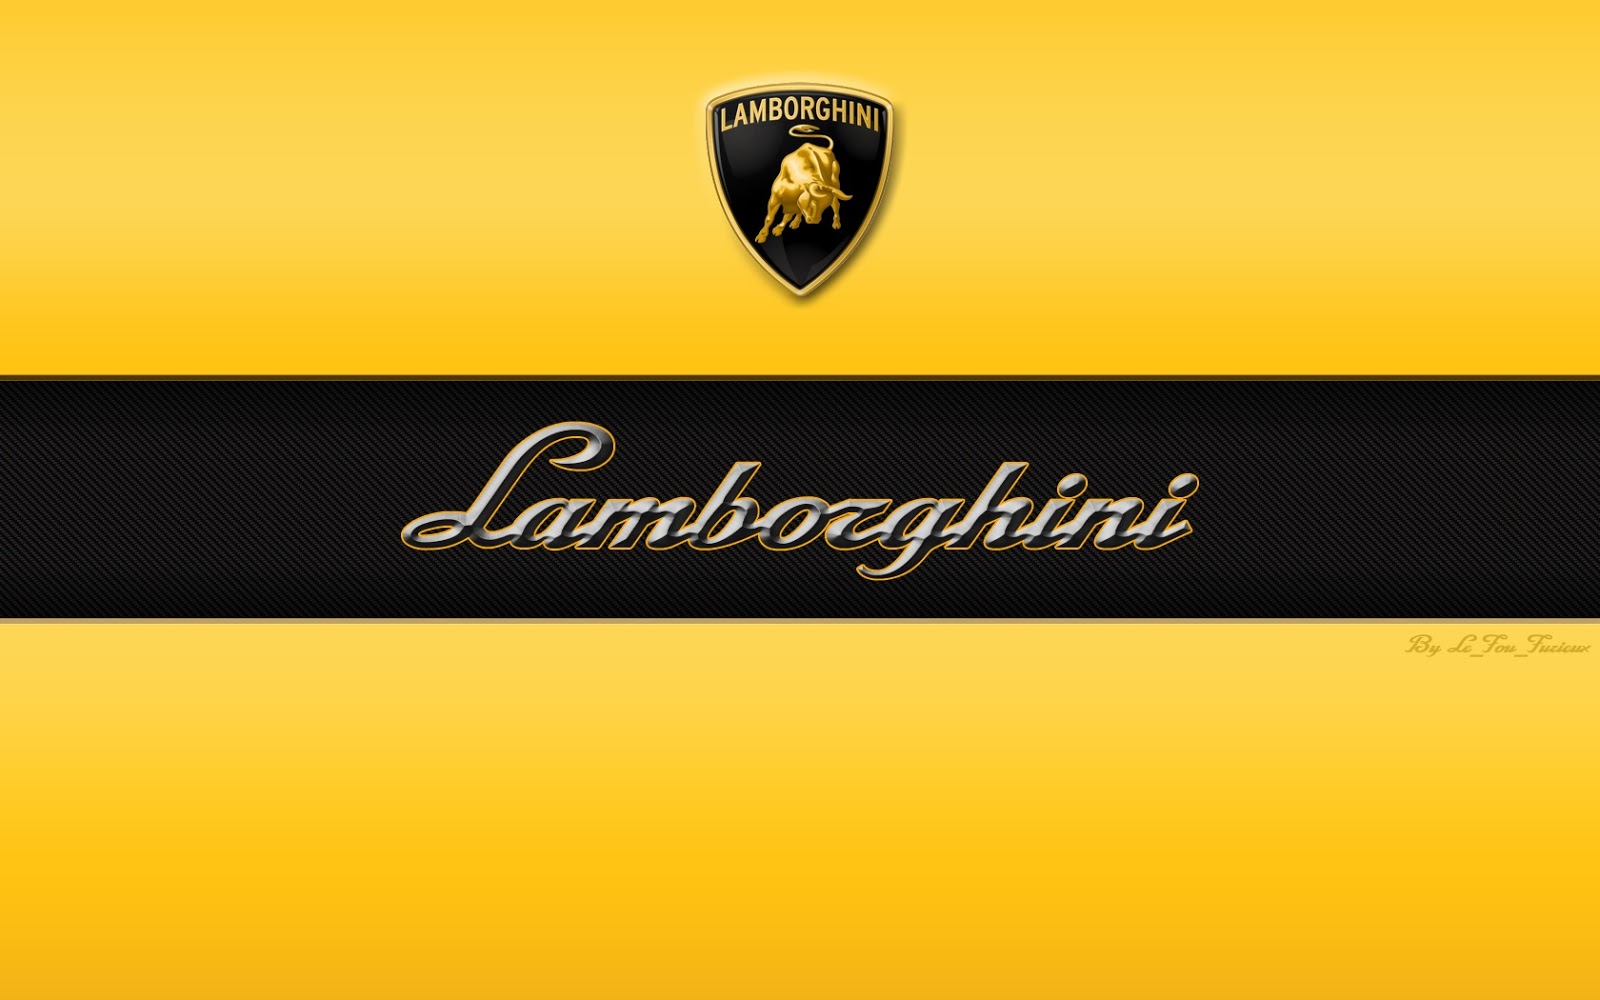 Lamborghini Logo Image Wallpaper